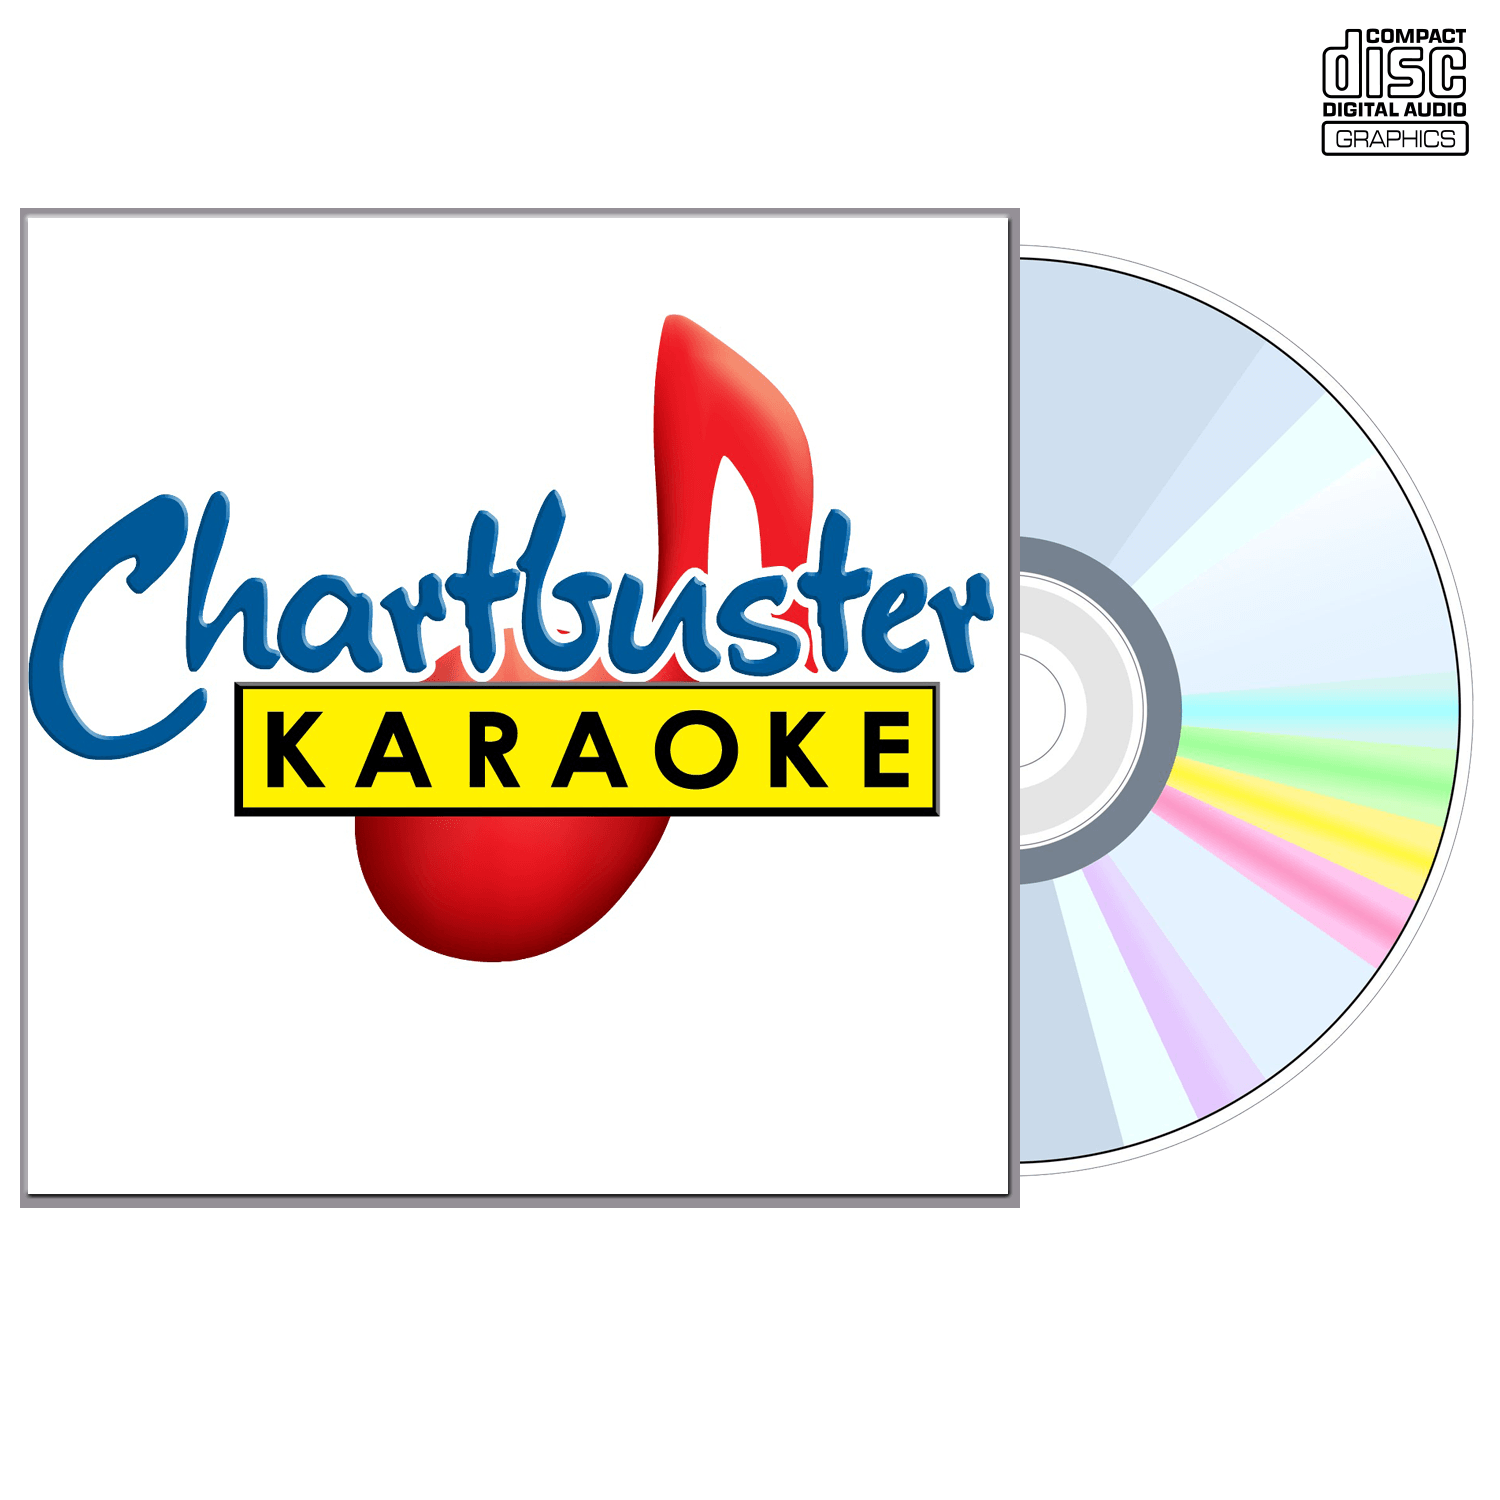 Ricky Martin - CD+G - Chartbuster Karaoke - Karaoke Home Entertainment